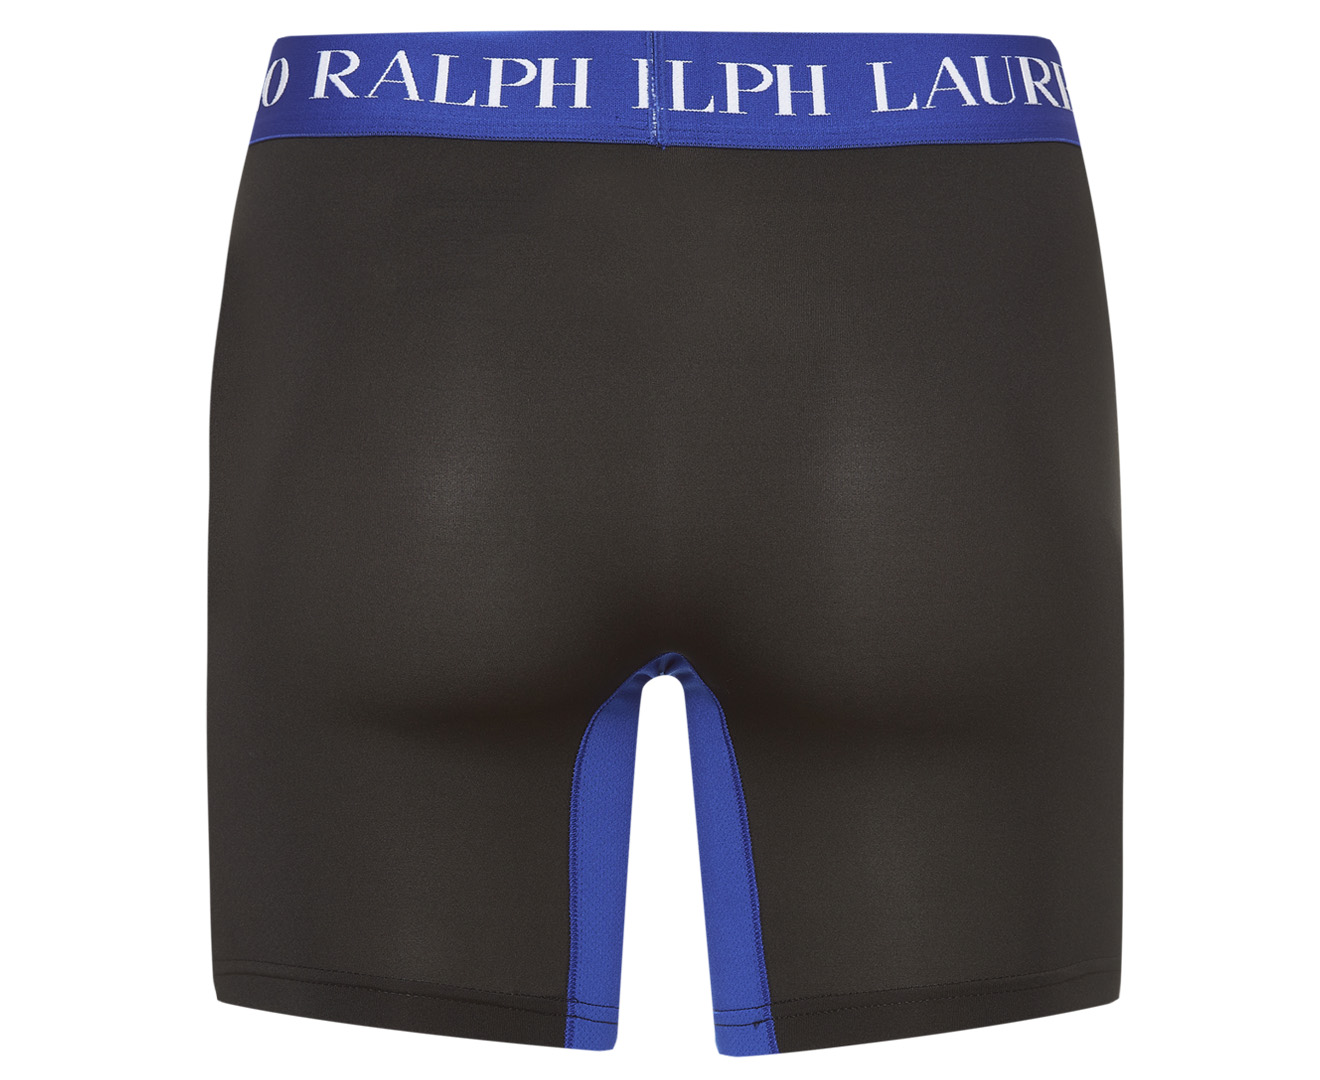 Polo Ralph Lauren 4D Flex Performance Mesh Boxer Briefs 3-Pack